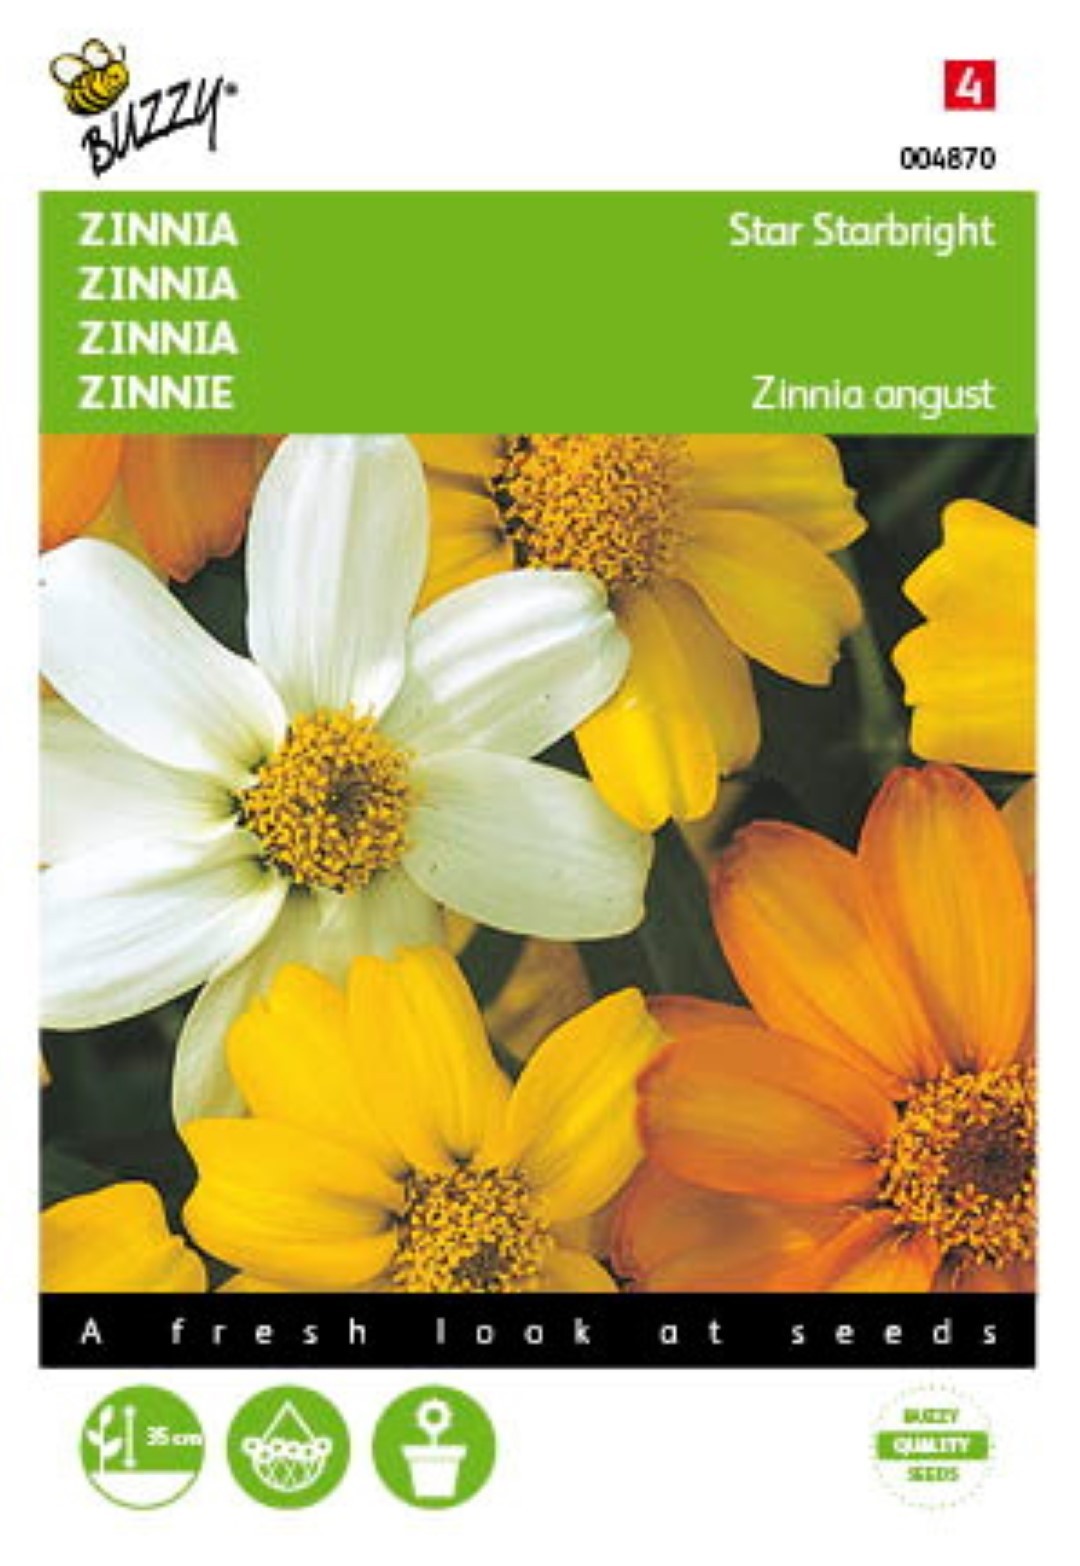 https://www.warentuin.nl/media/catalog/product/1/7/1778711117048701_buzzy_seeds_tuinzaden_buzzy_zinnia_star_starbright_gemengd_1_63ec.jpeg